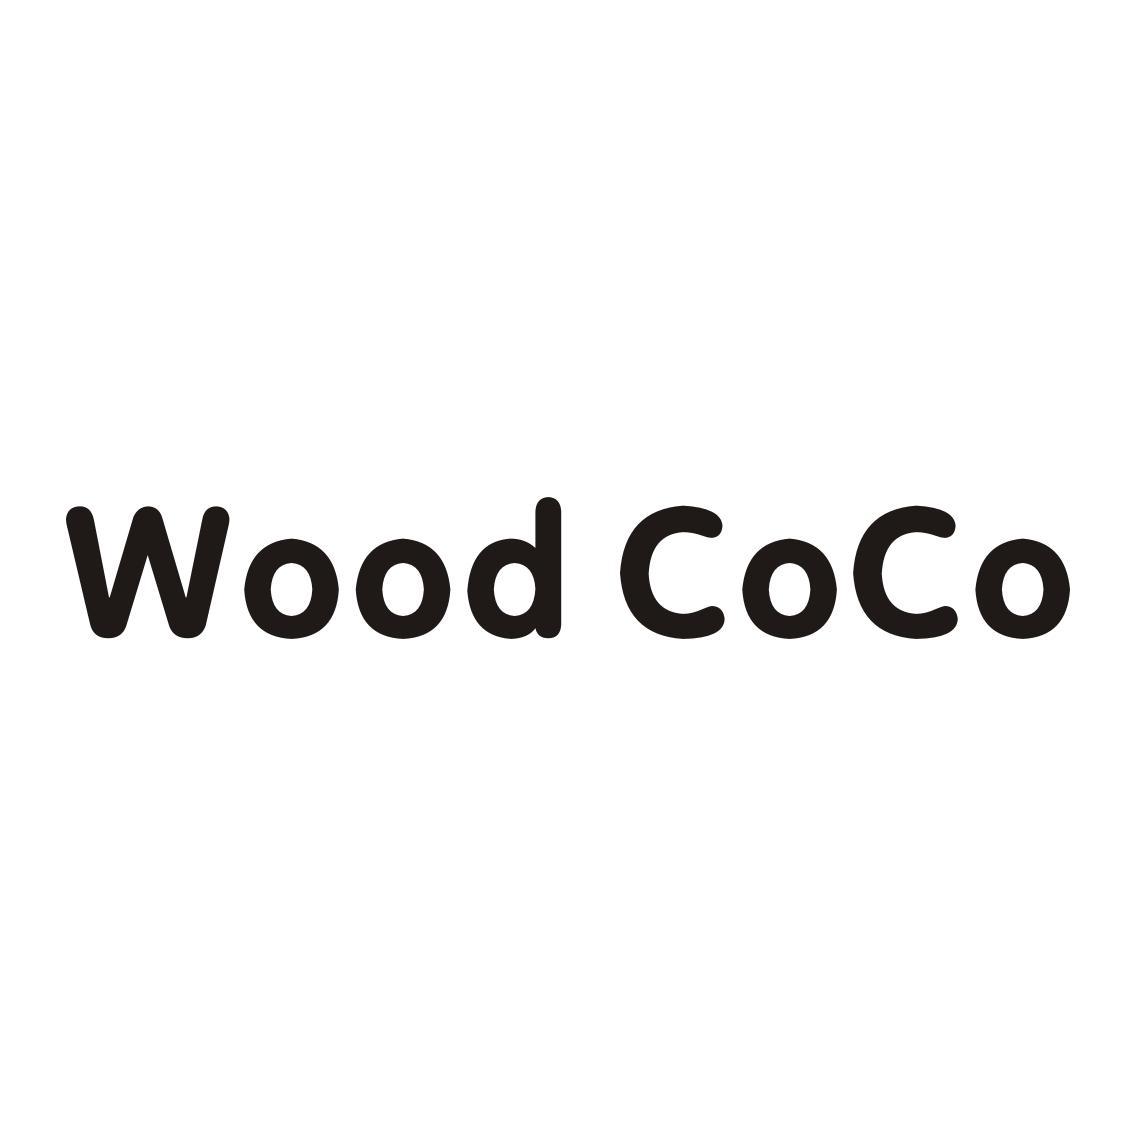 WOOD COCO